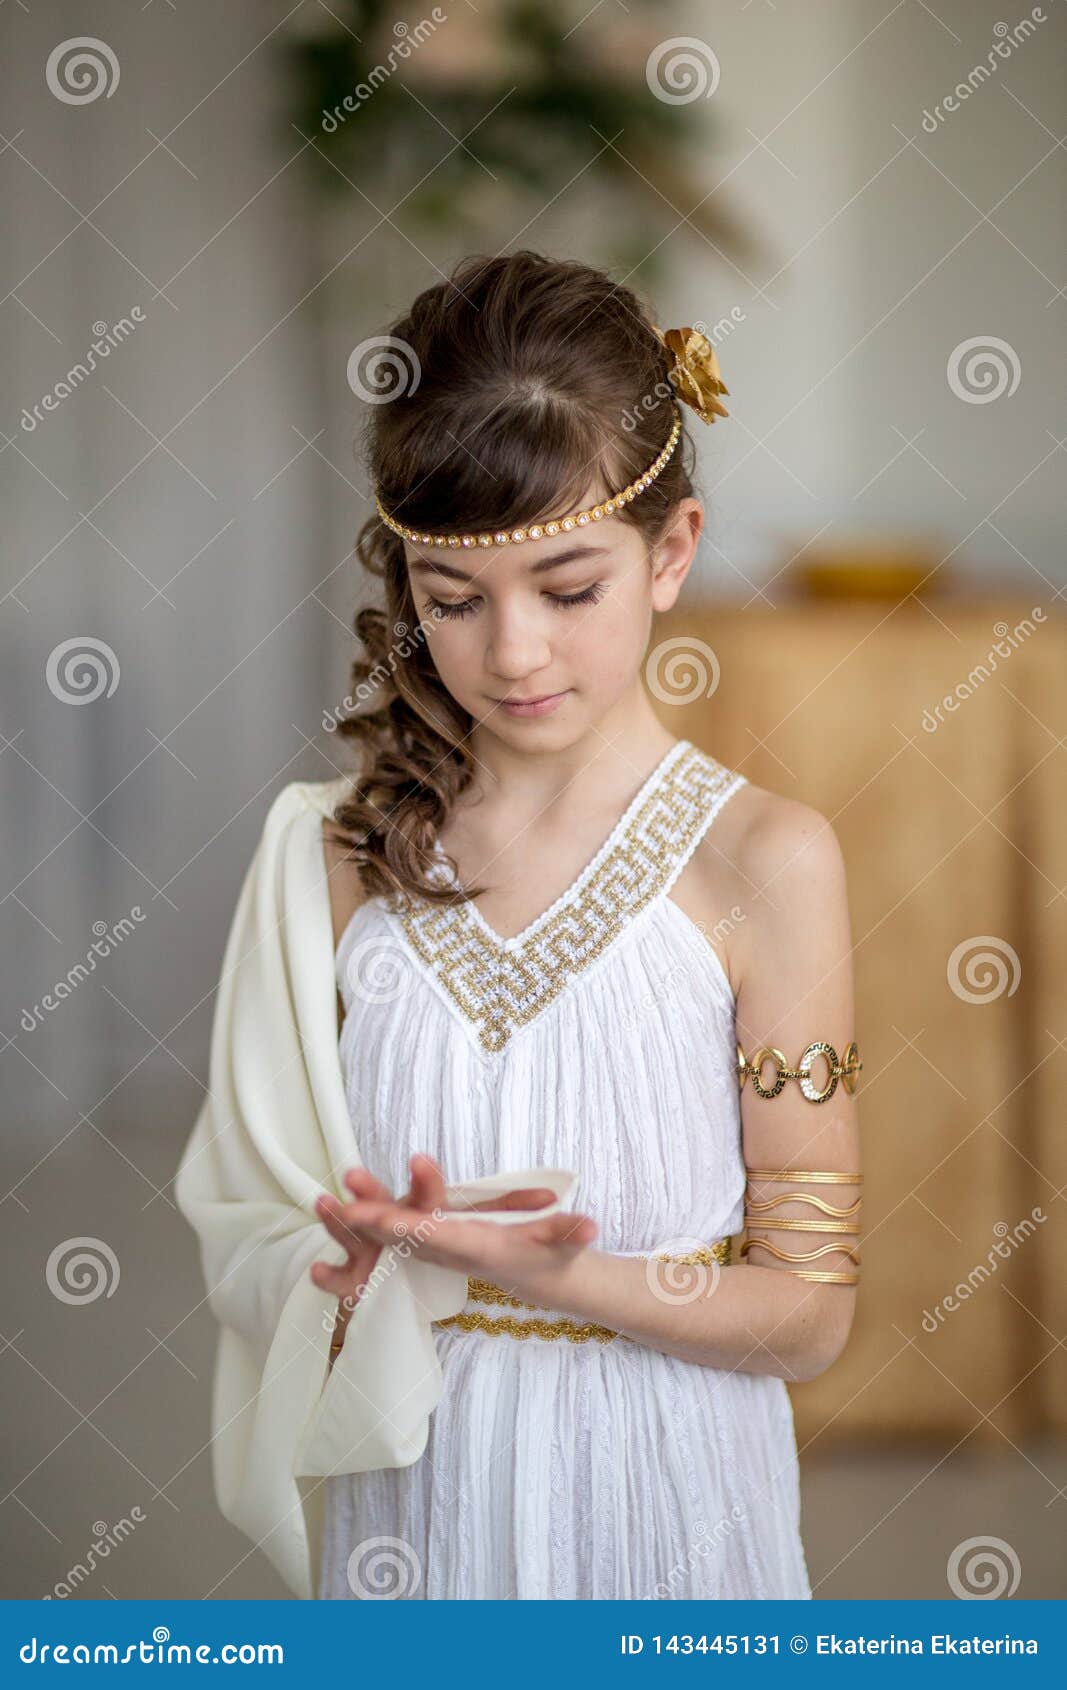 Beautiful Girl in Greek Dress Stock Image - Image of girls, greece:  143445131